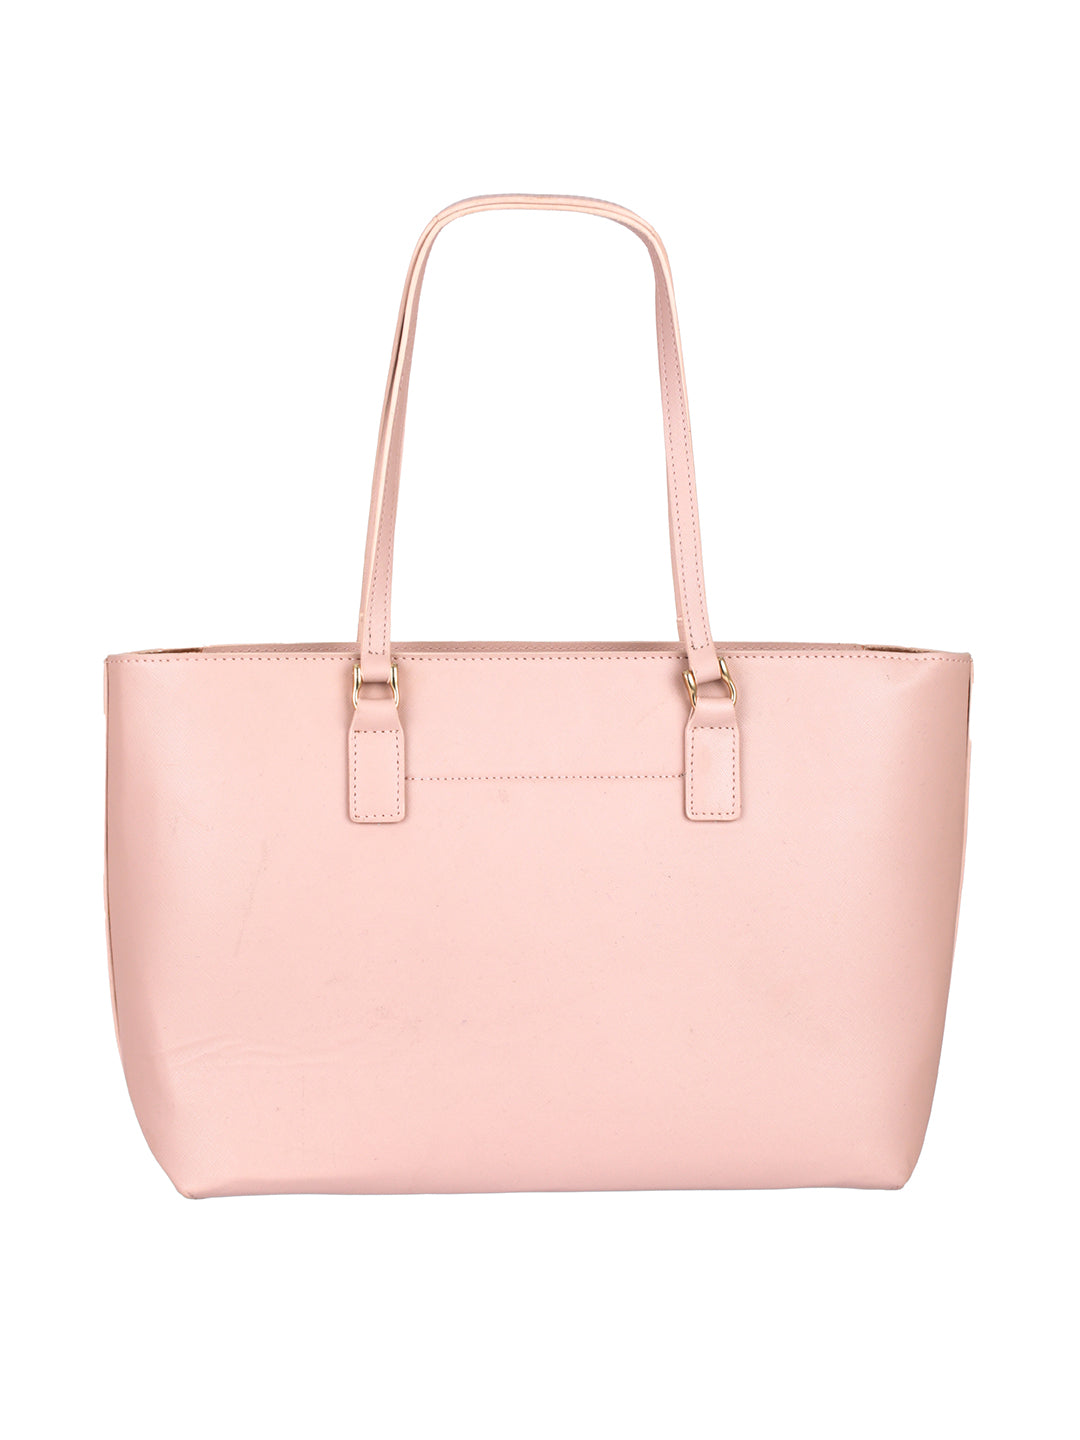 Blush Pink Solid Tote Bag